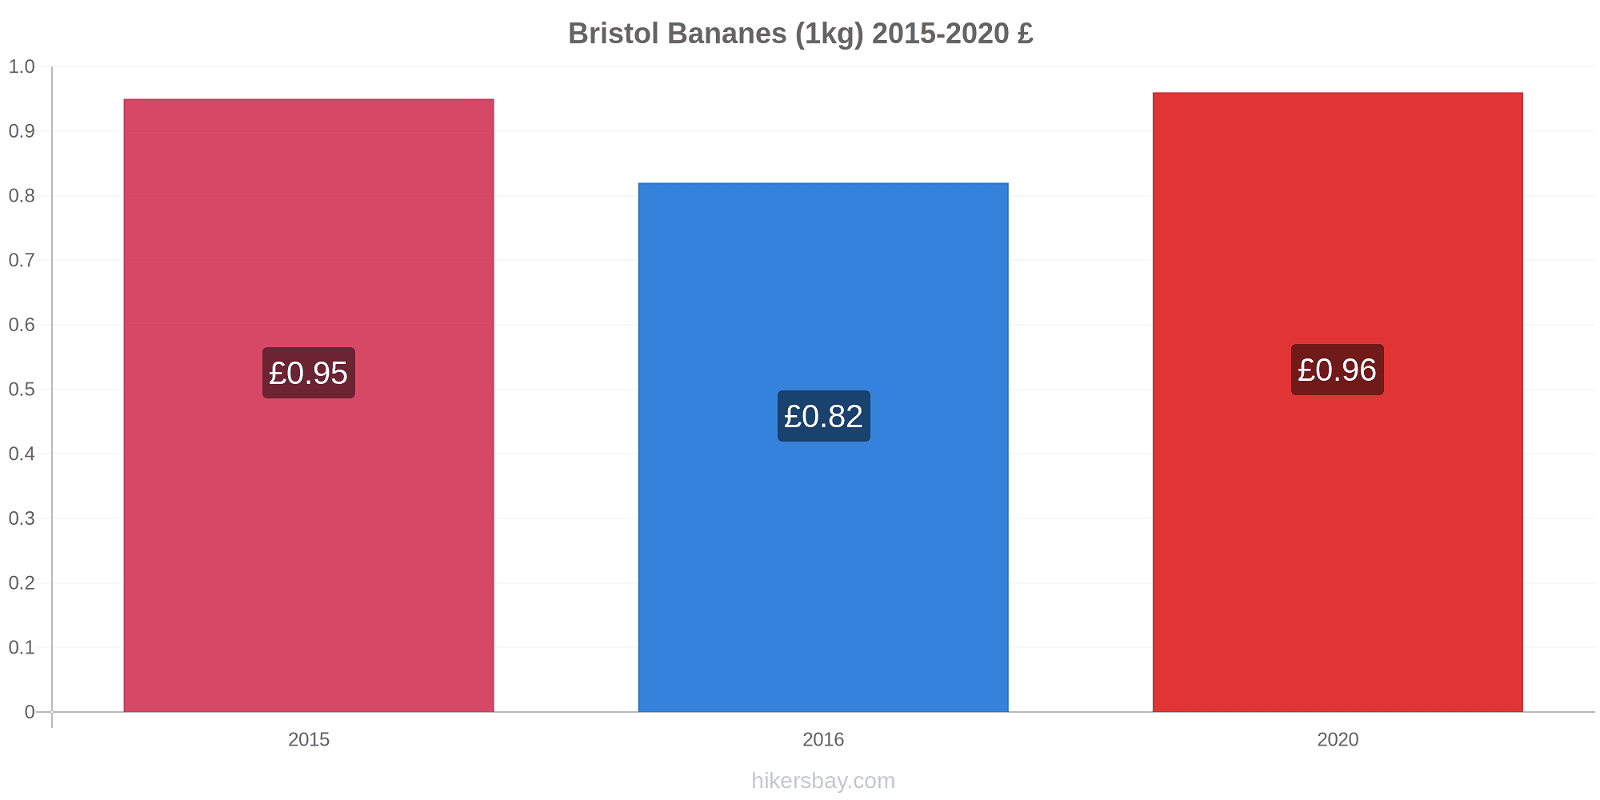 Bristol changements de prix Bananes (1kg) hikersbay.com